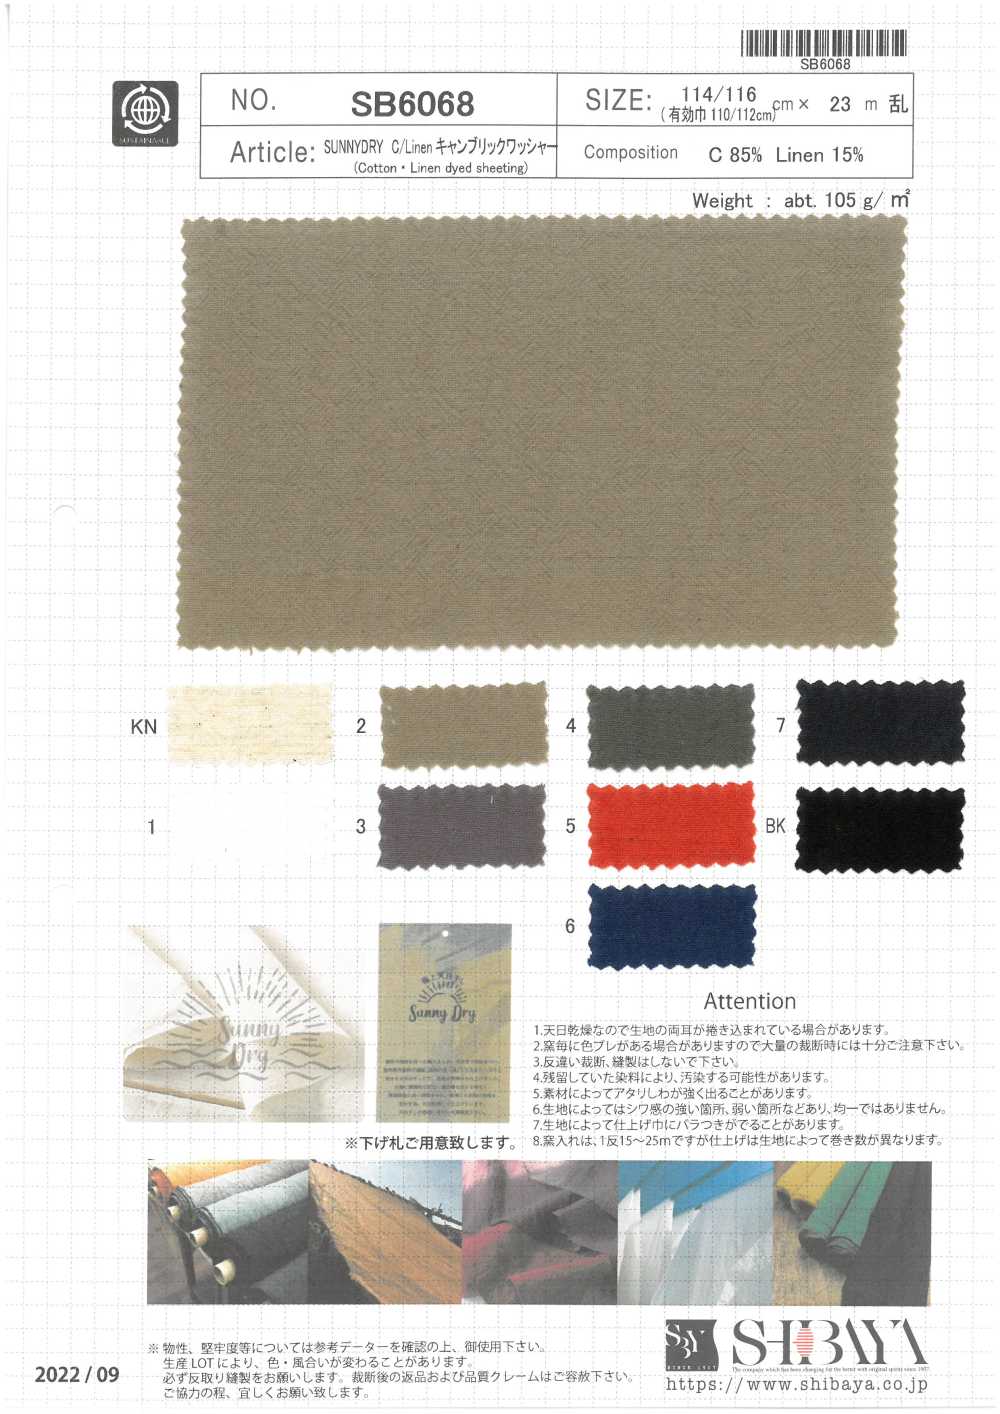 SB6068 SUNNYDRY Cotton Linen Cambric Washer Processing[Textile / Fabric] SHIBAYA